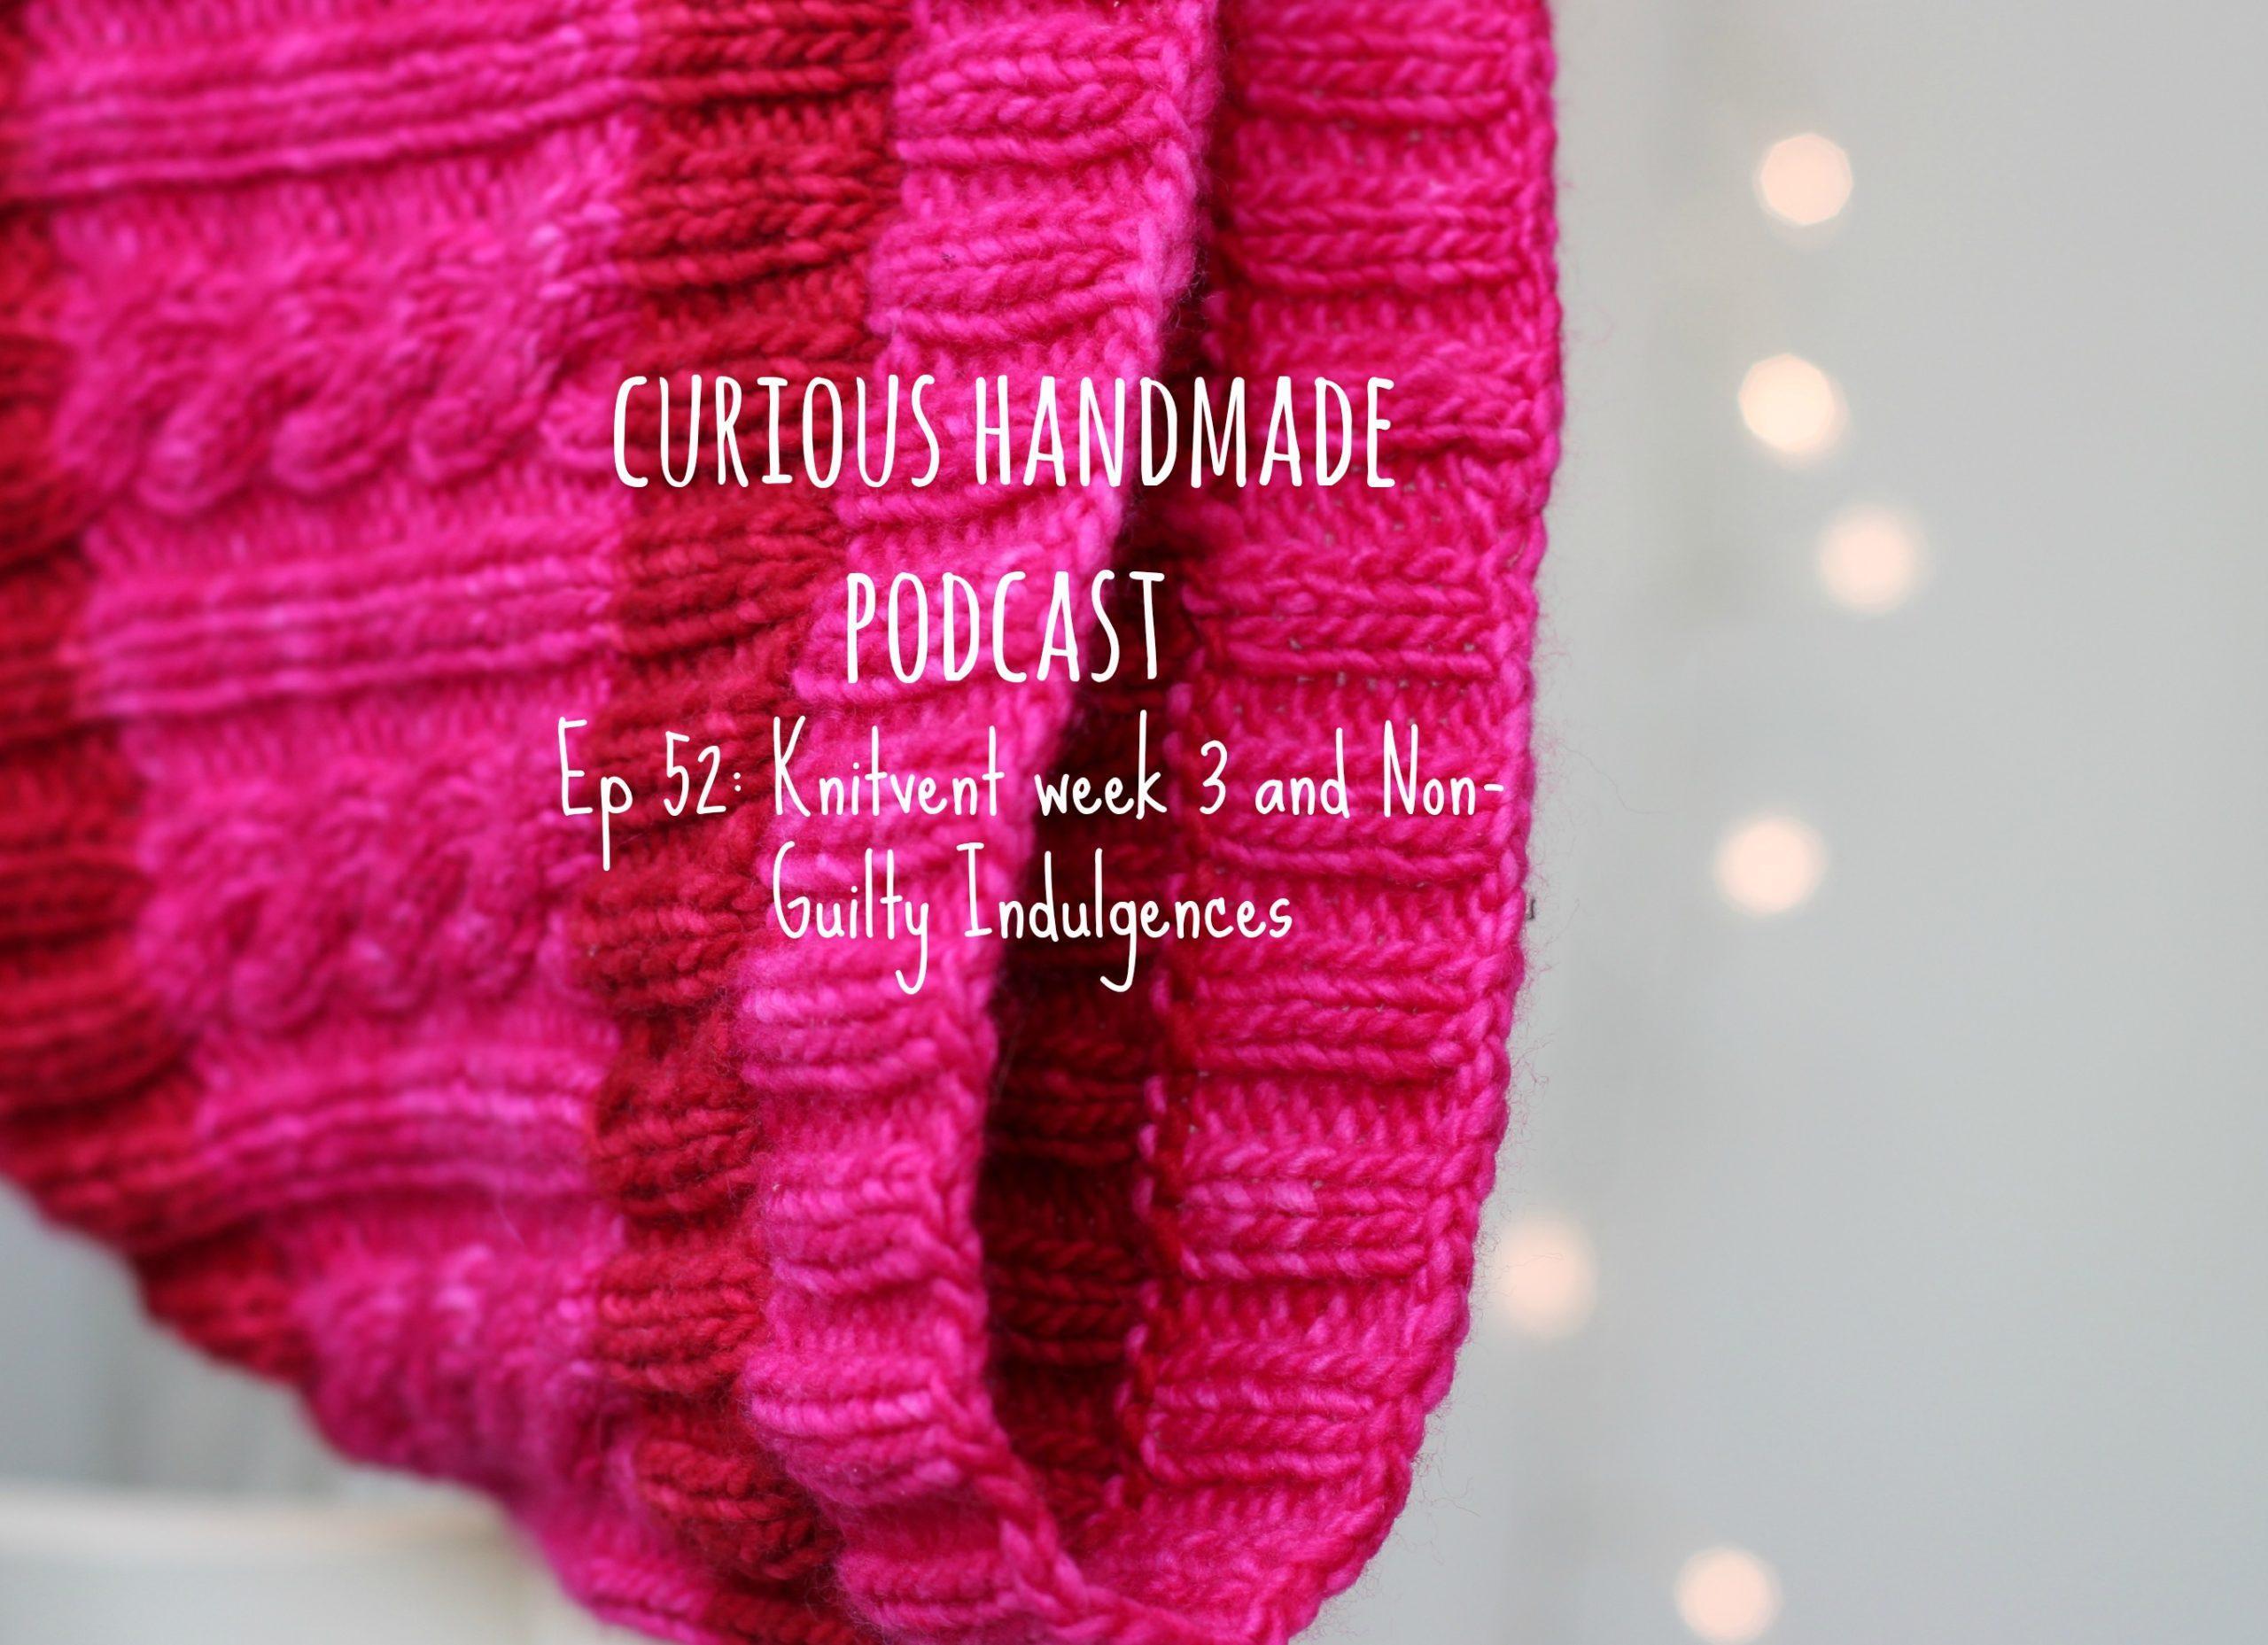 Curious Handmade Podcast ep 52